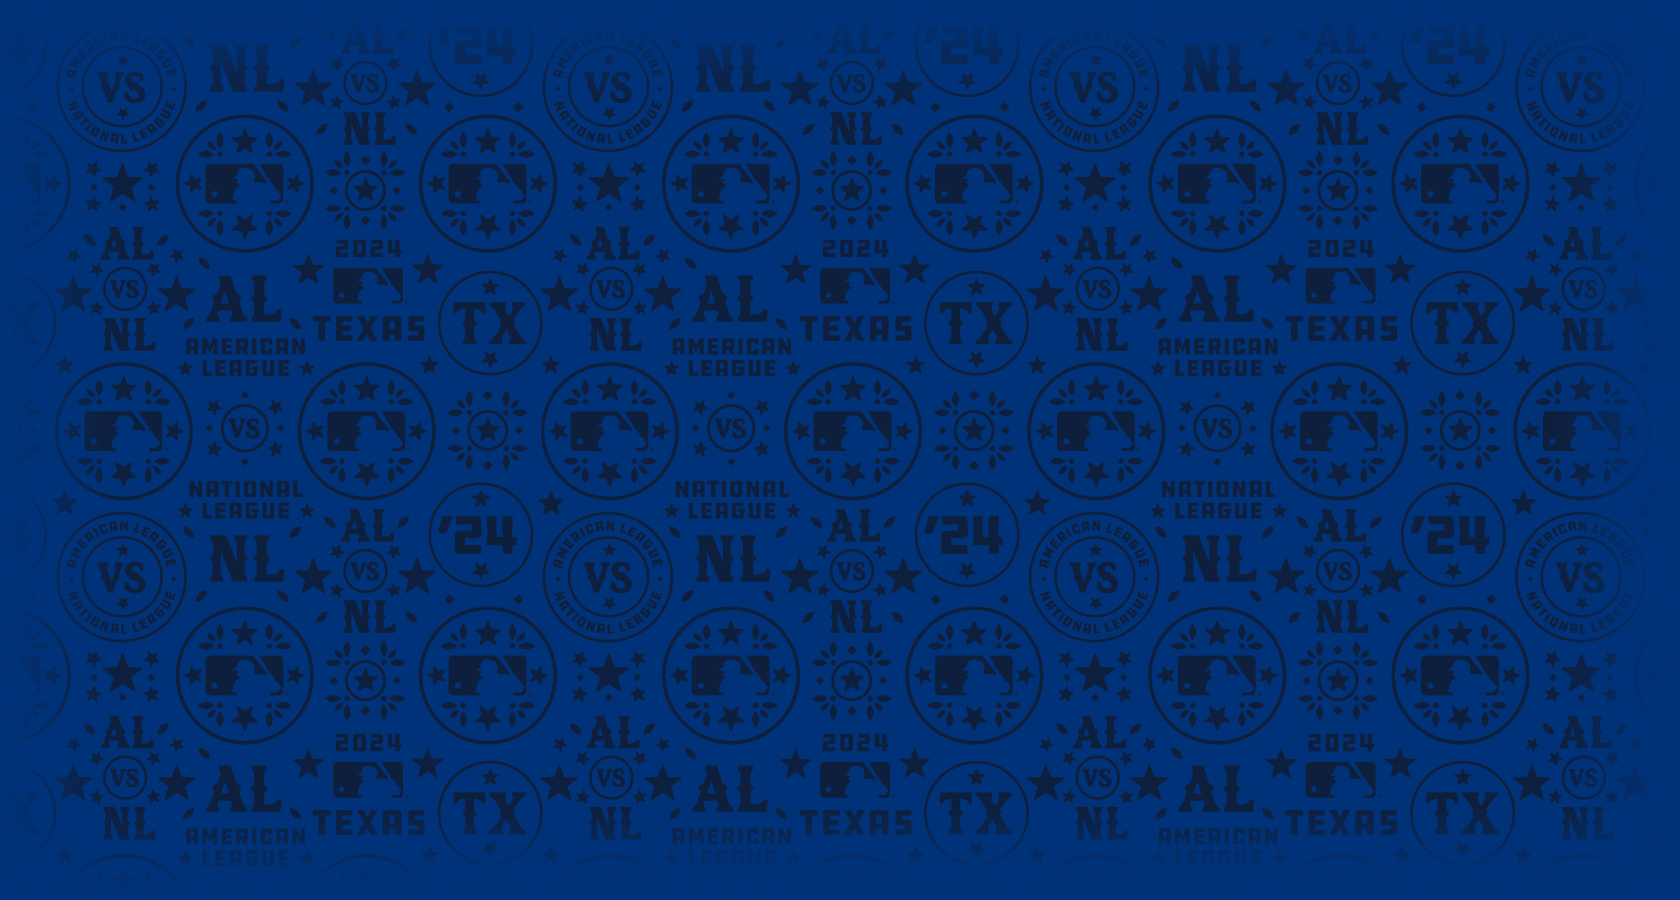 Texas Rangers – Heritage Sports Art